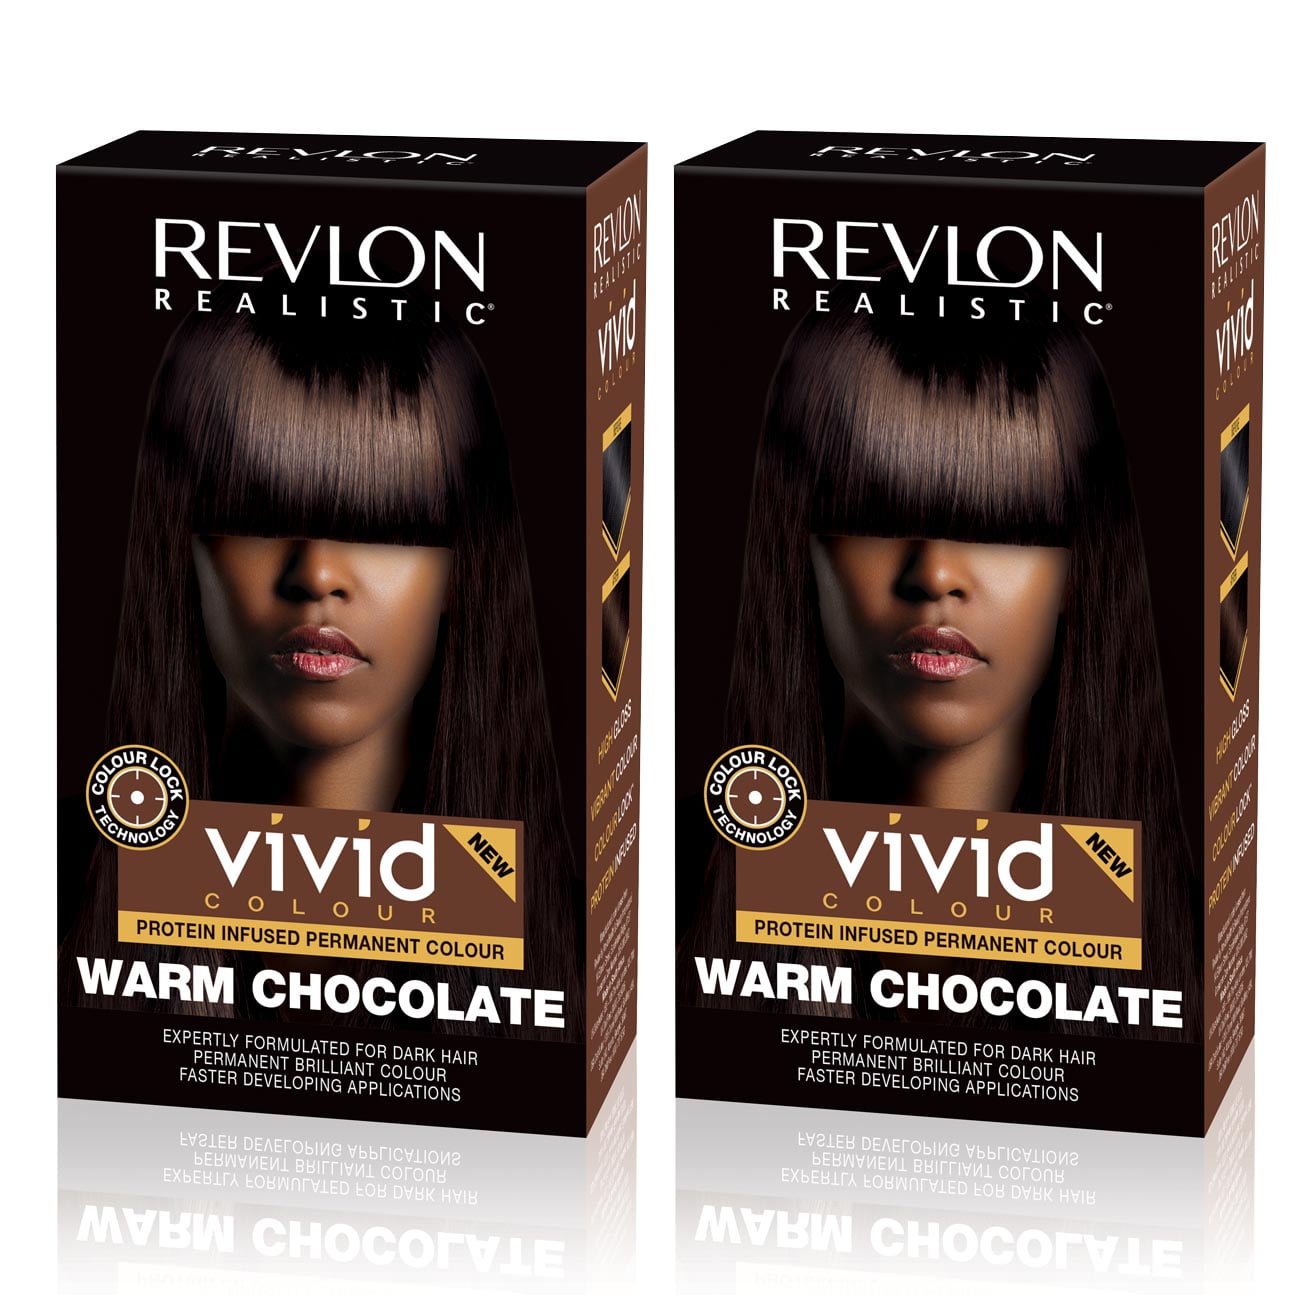 Revlon Realistic Vivid Colour Hair Dye For Dark Hair Warm Chocolate Pack Of 2 Walmart Com Walmart Com,Happiest States In America 2020